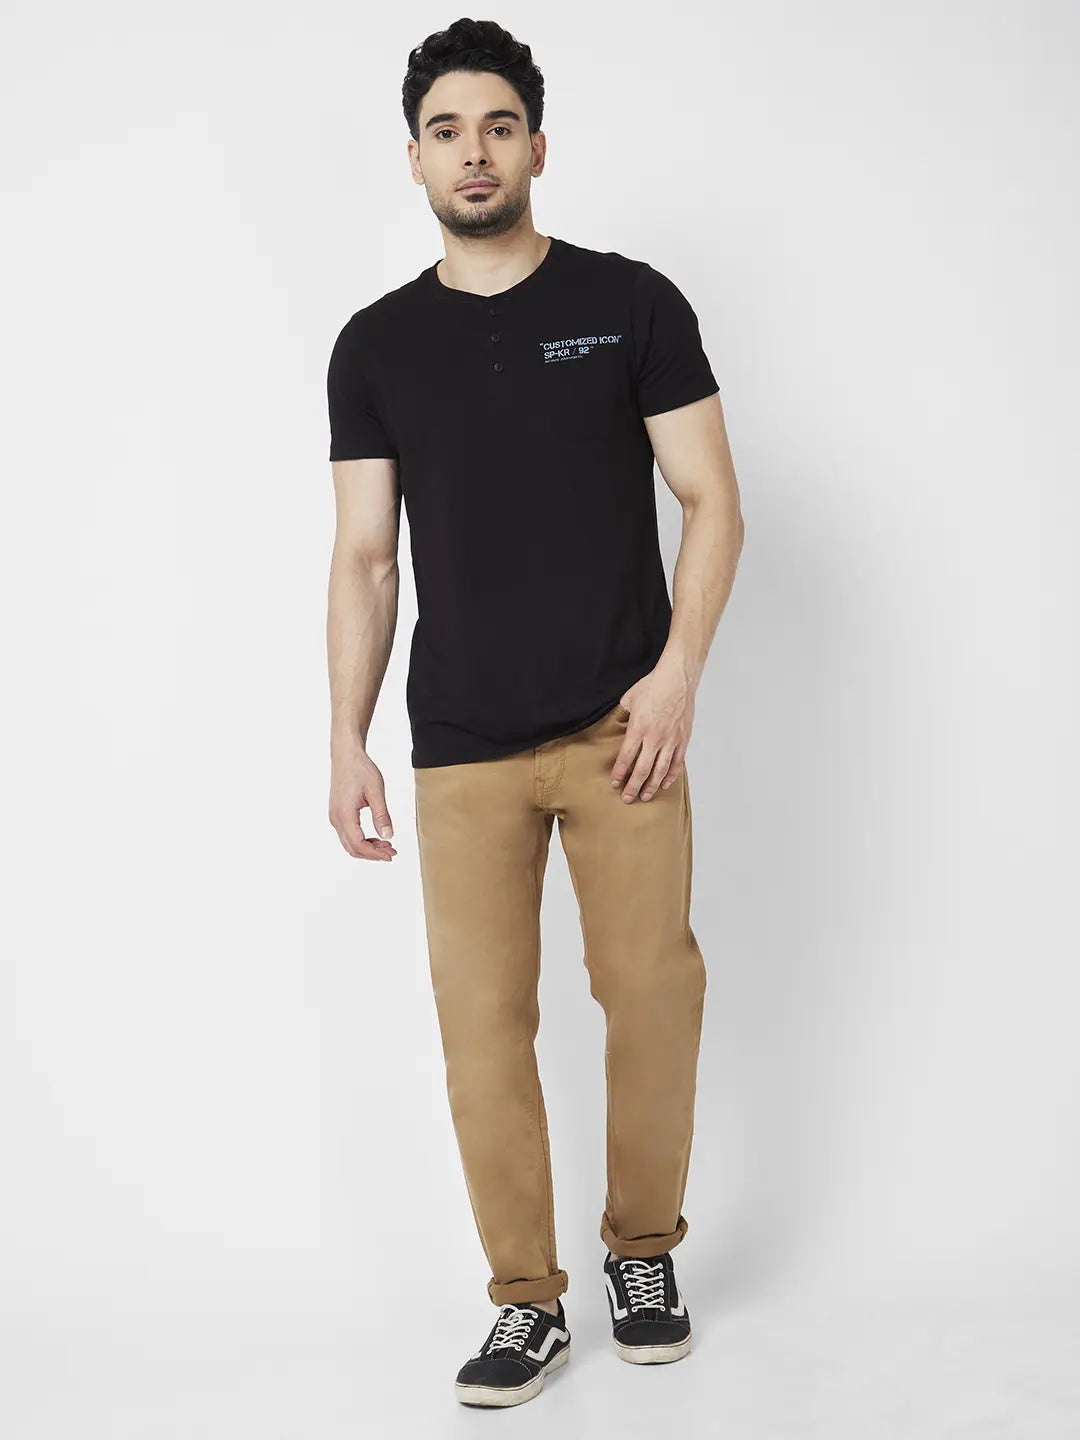 Spykar Men Light Sand Cotton Stretch Slim Fit Narrow Length Clean Look Low Rise Jeans (Skinny)